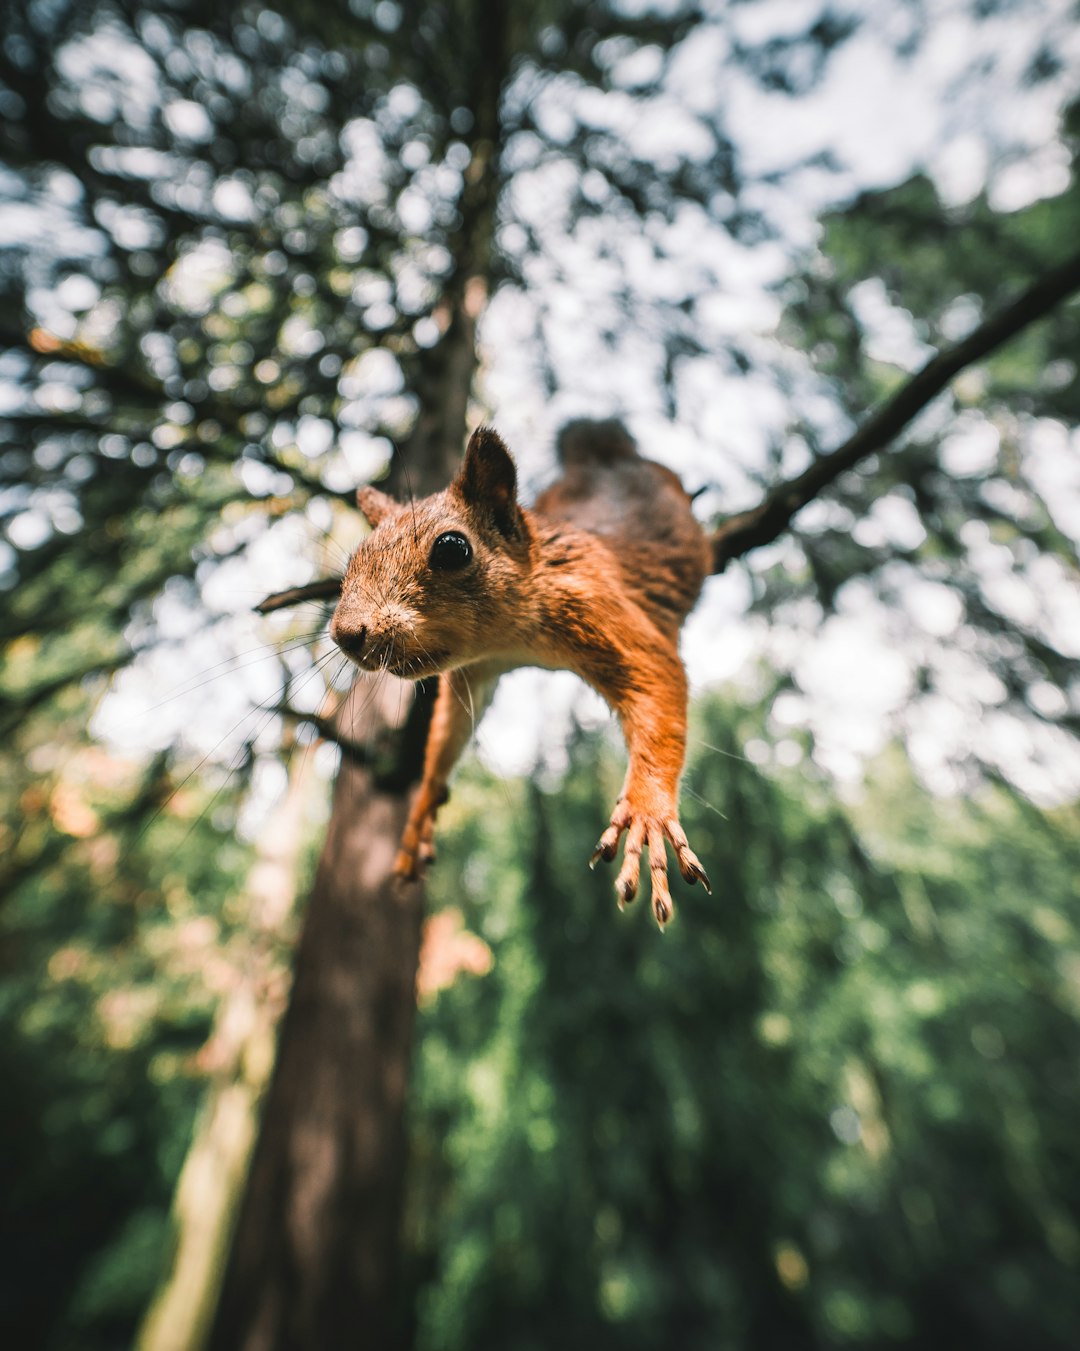  brown squirrel on tree branch during daytime squirrel